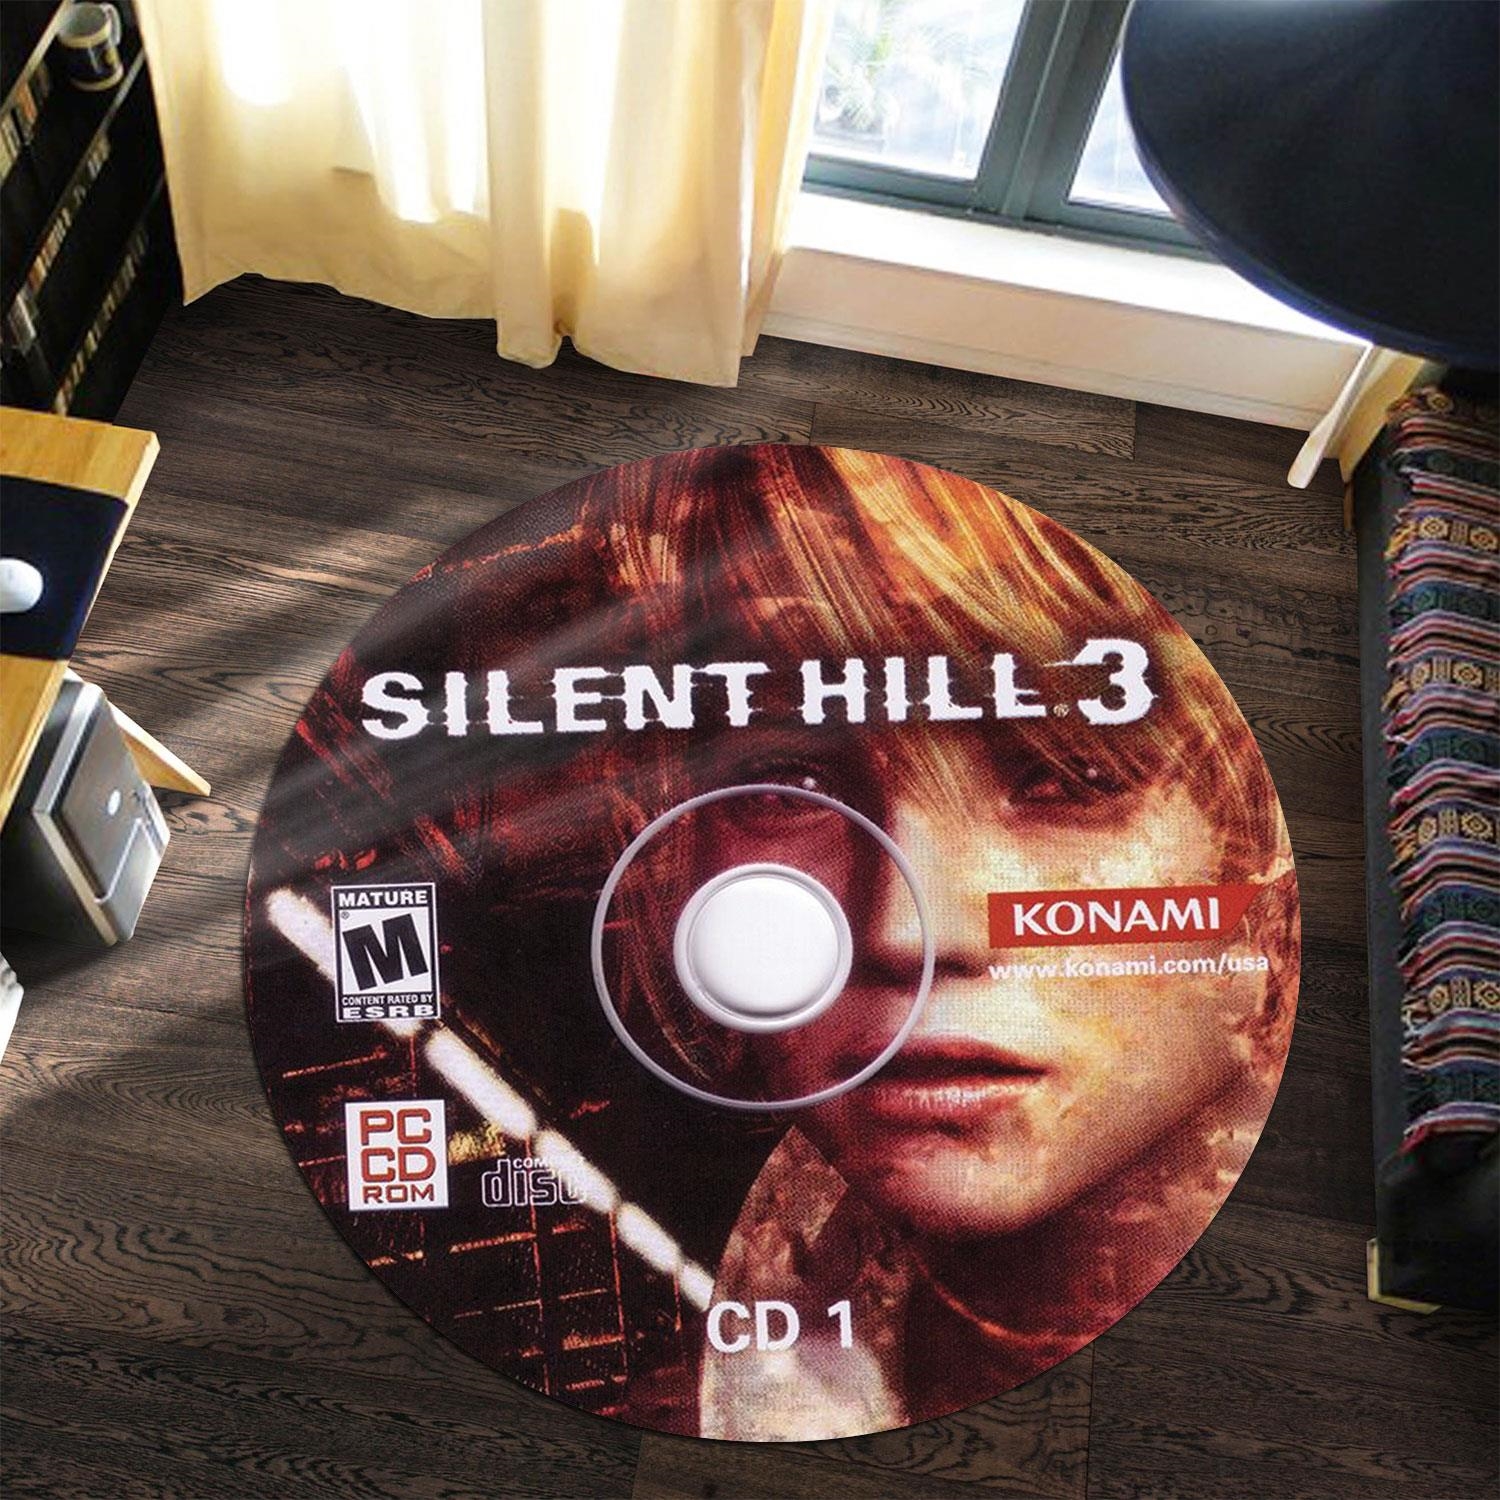 Silent Hill 3 Version Disc Round Rug Carpet